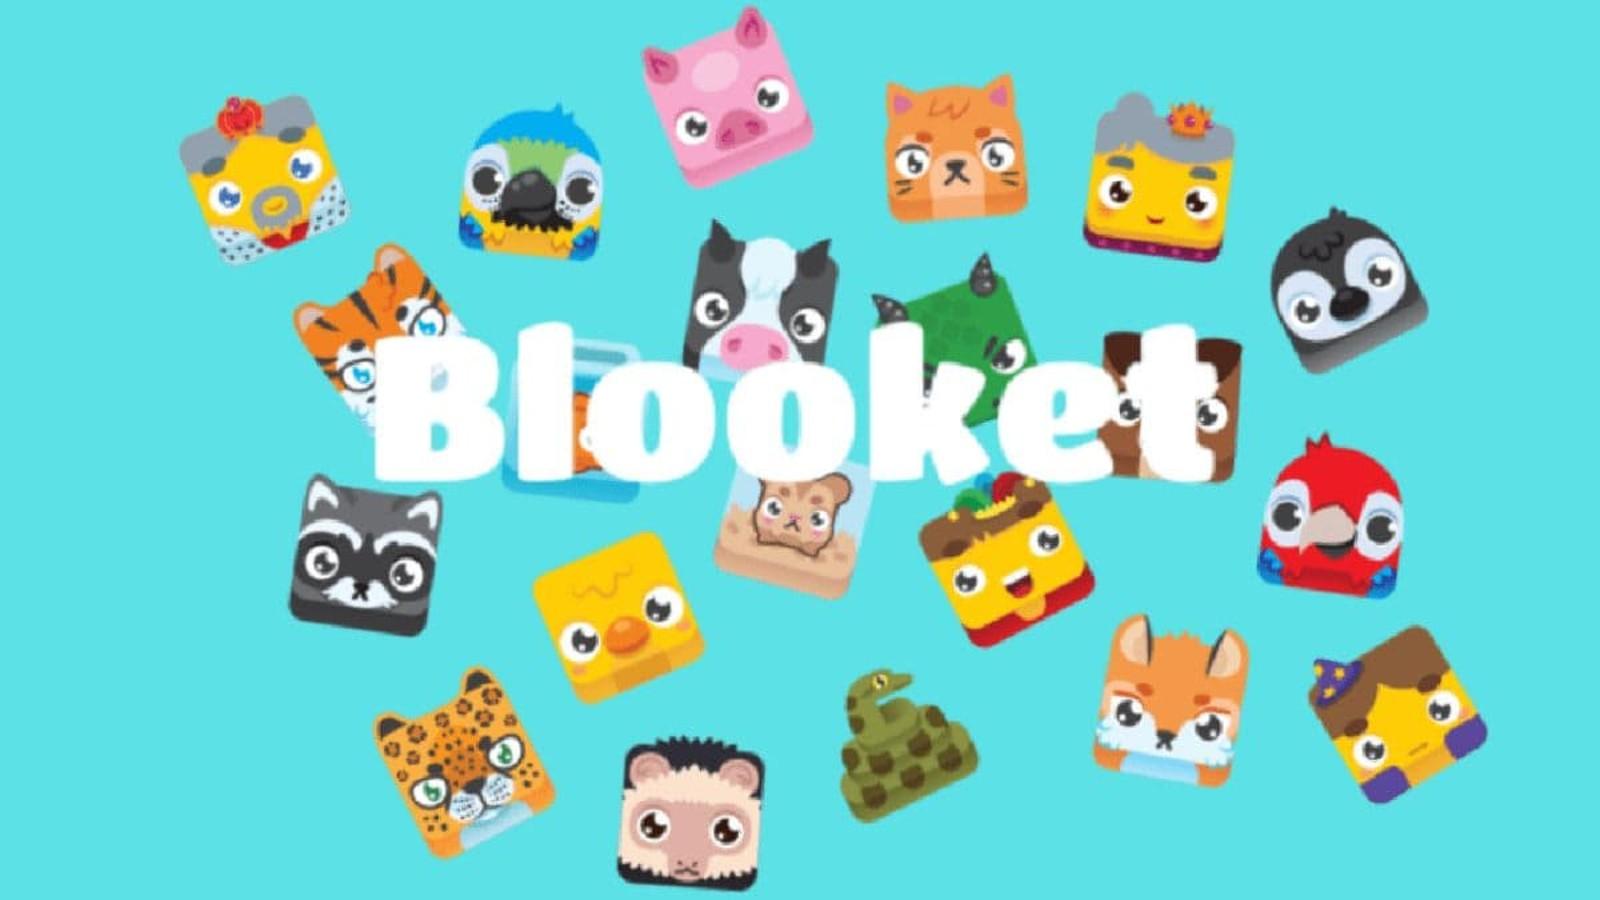 An image of Blooket artwork.